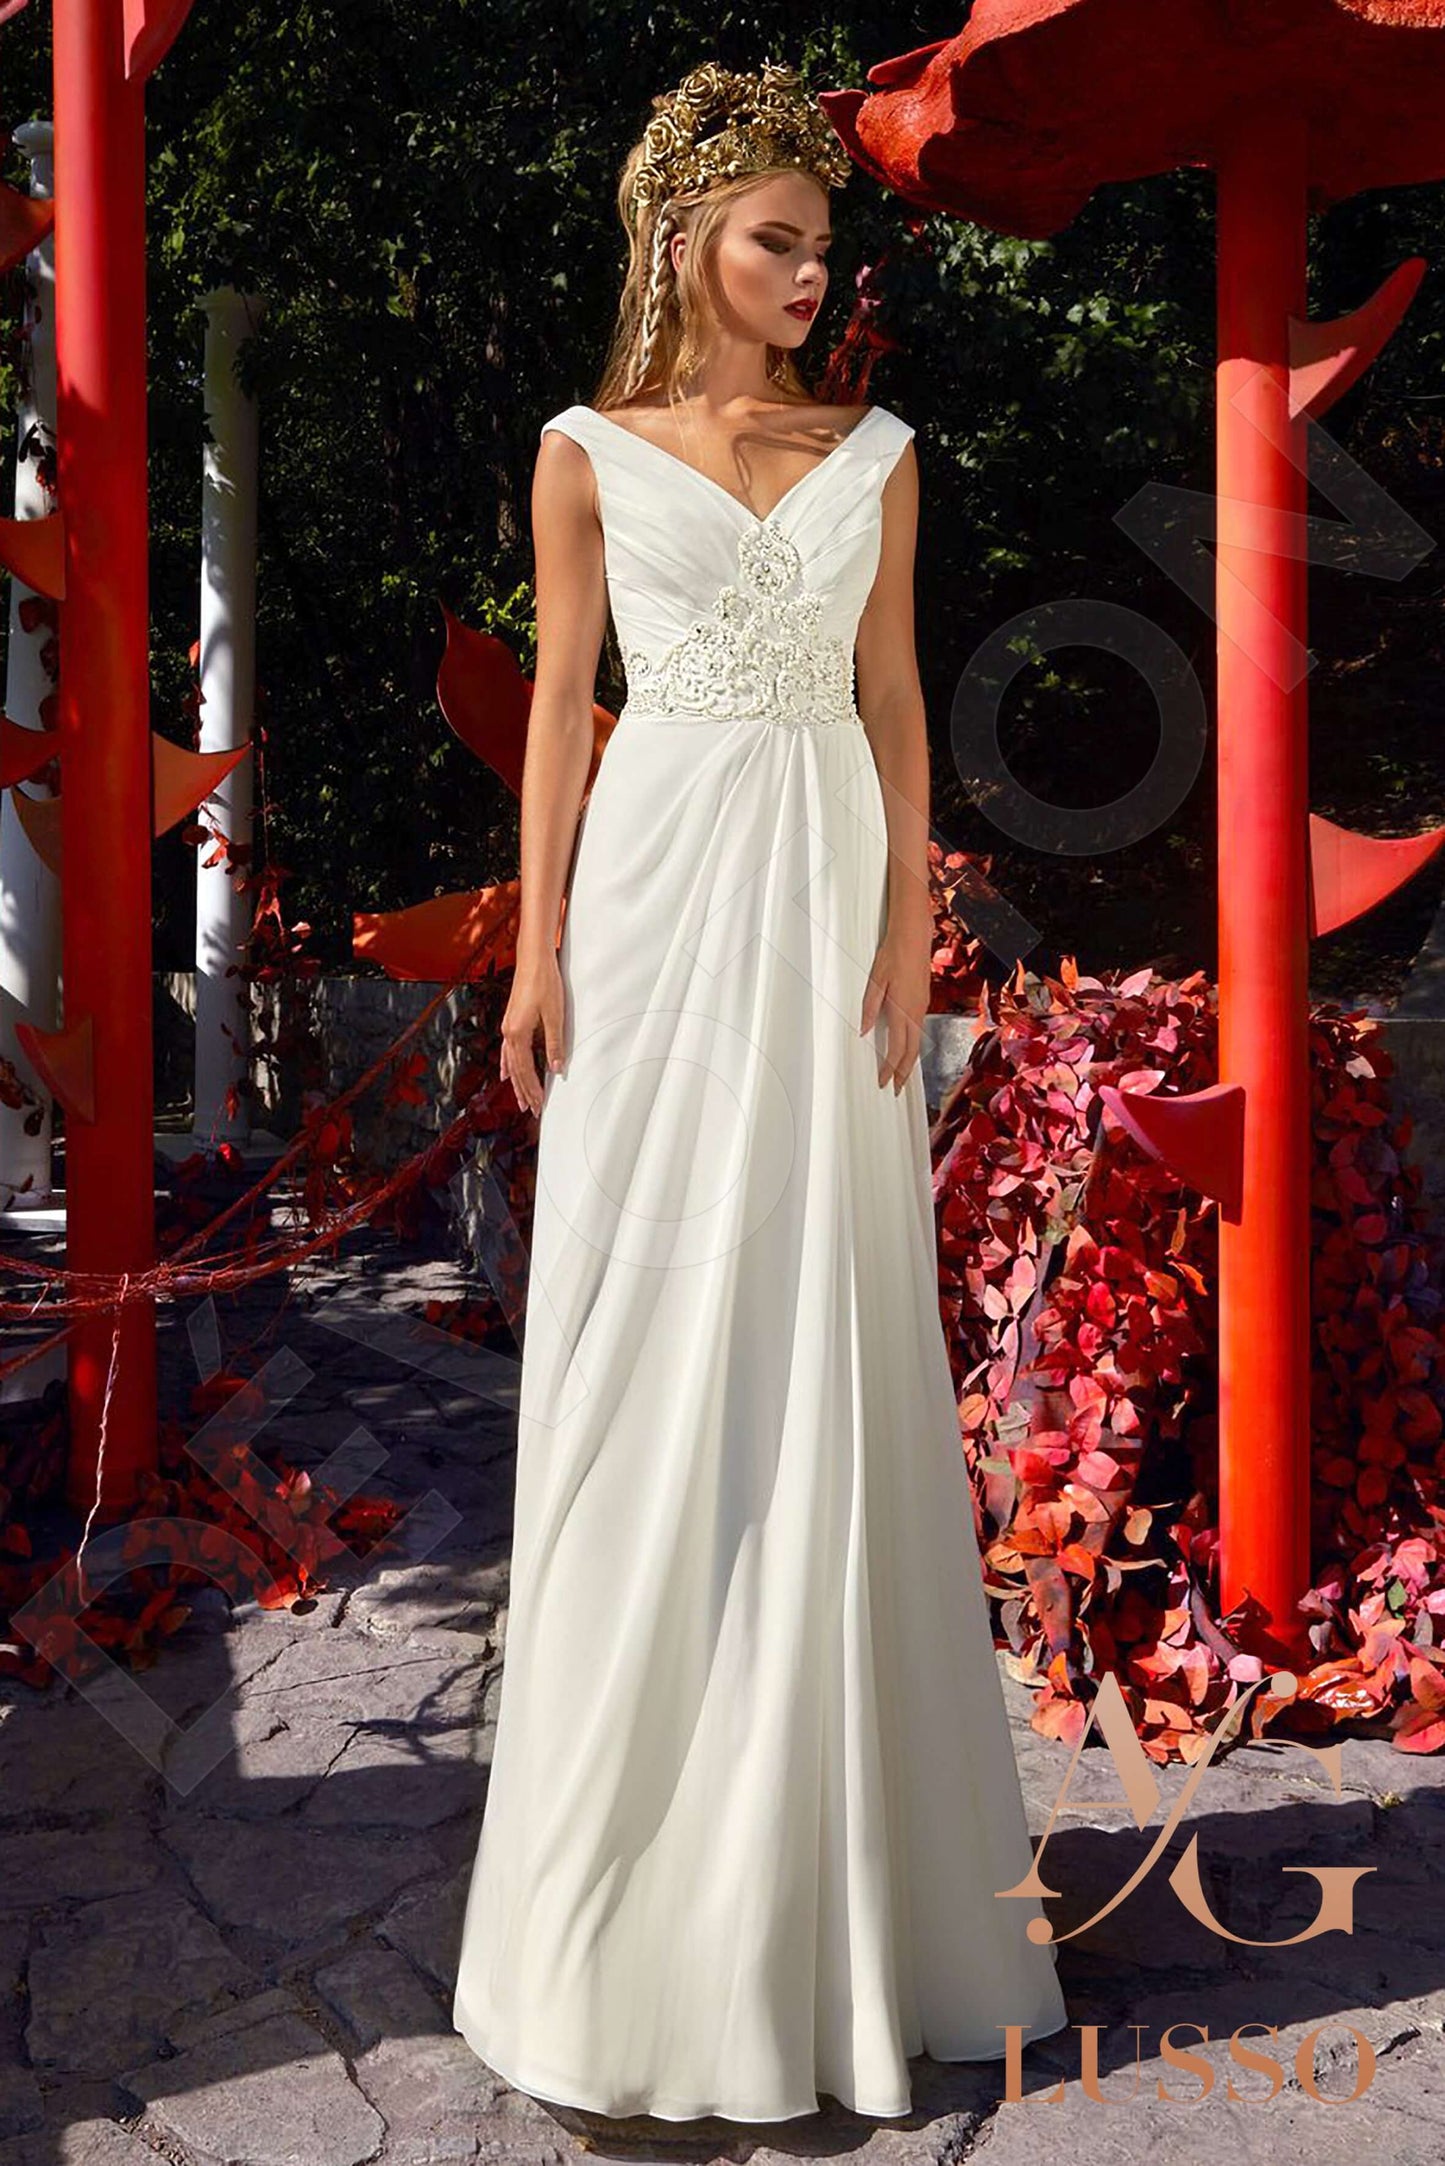 Anita Open back A-line Sleeveless Wedding Dress Front